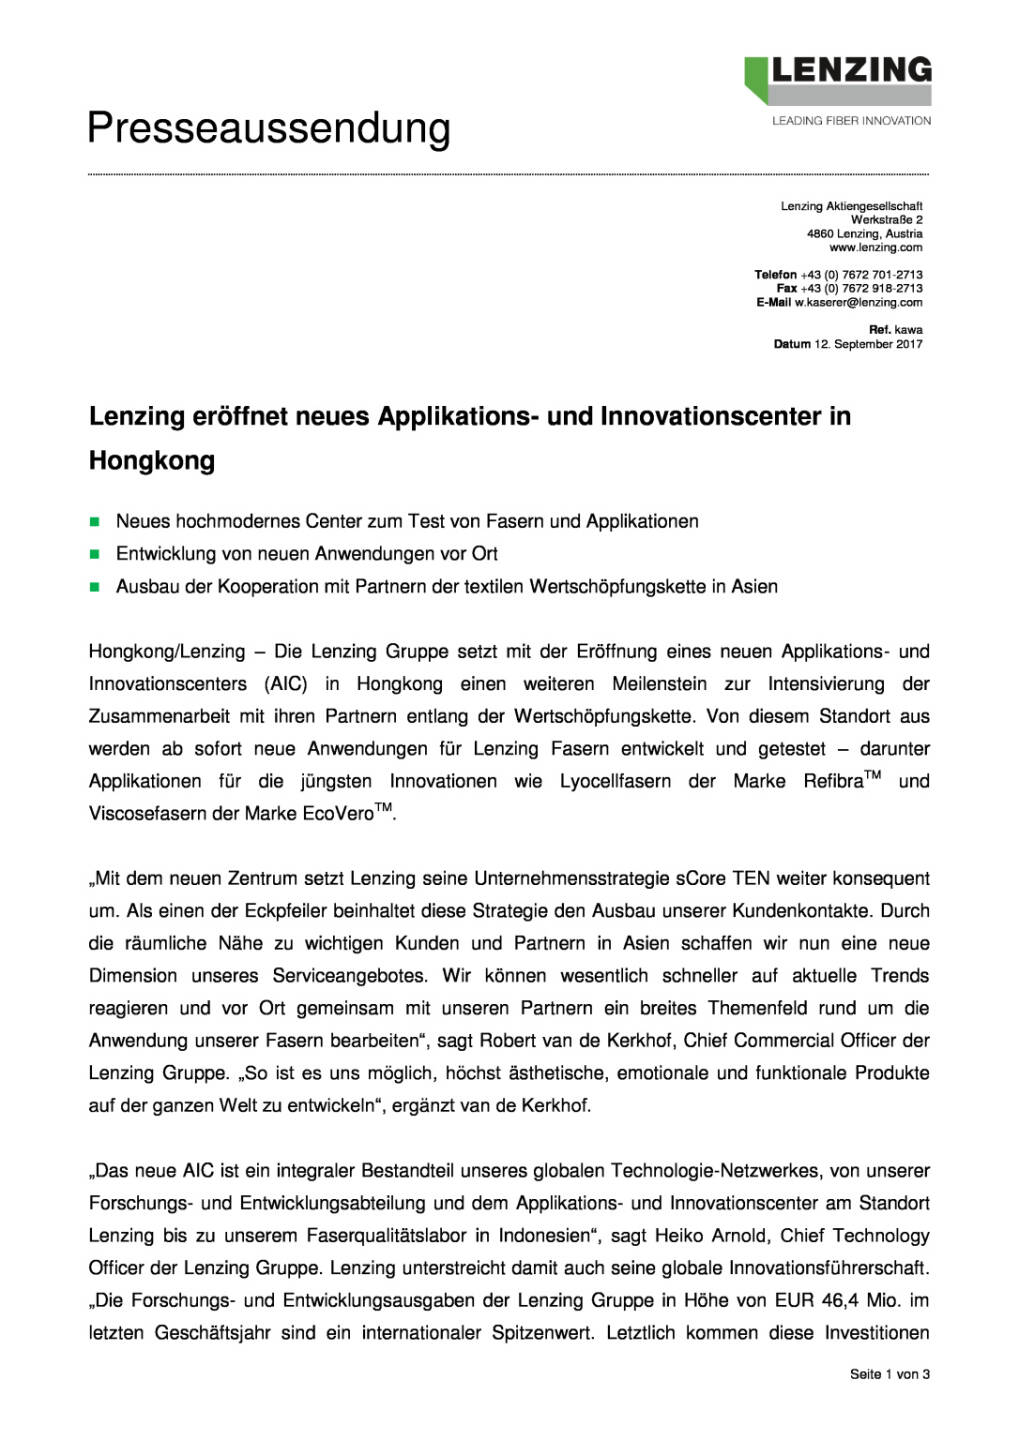 Lenzing eröffnet neues Applikations- und Innovationscenter in Hongkong, Seite 1/3, komplettes Dokument unter http://boerse-social.com/static/uploads/file_2333_lenzing_eroffnet_neues_applikations-_und_innovationscenter_in_hongkong.pdf